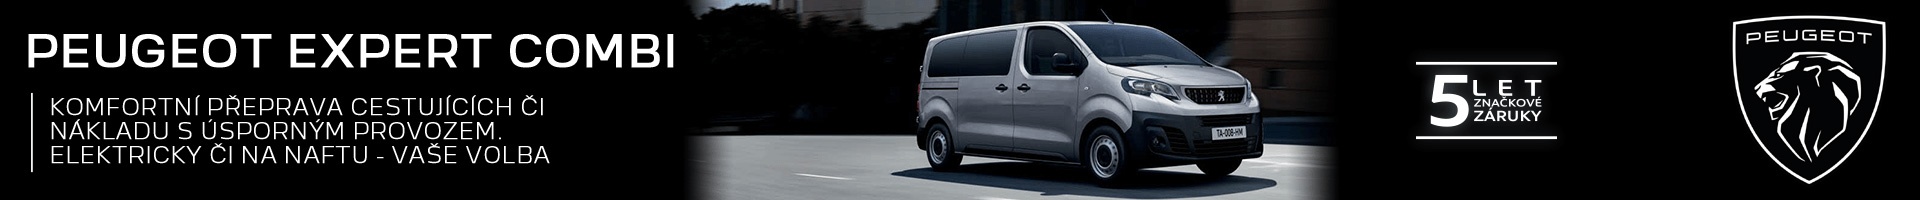 Peugeot Expert combi/polocombi a e-Expert - van of the year 2021